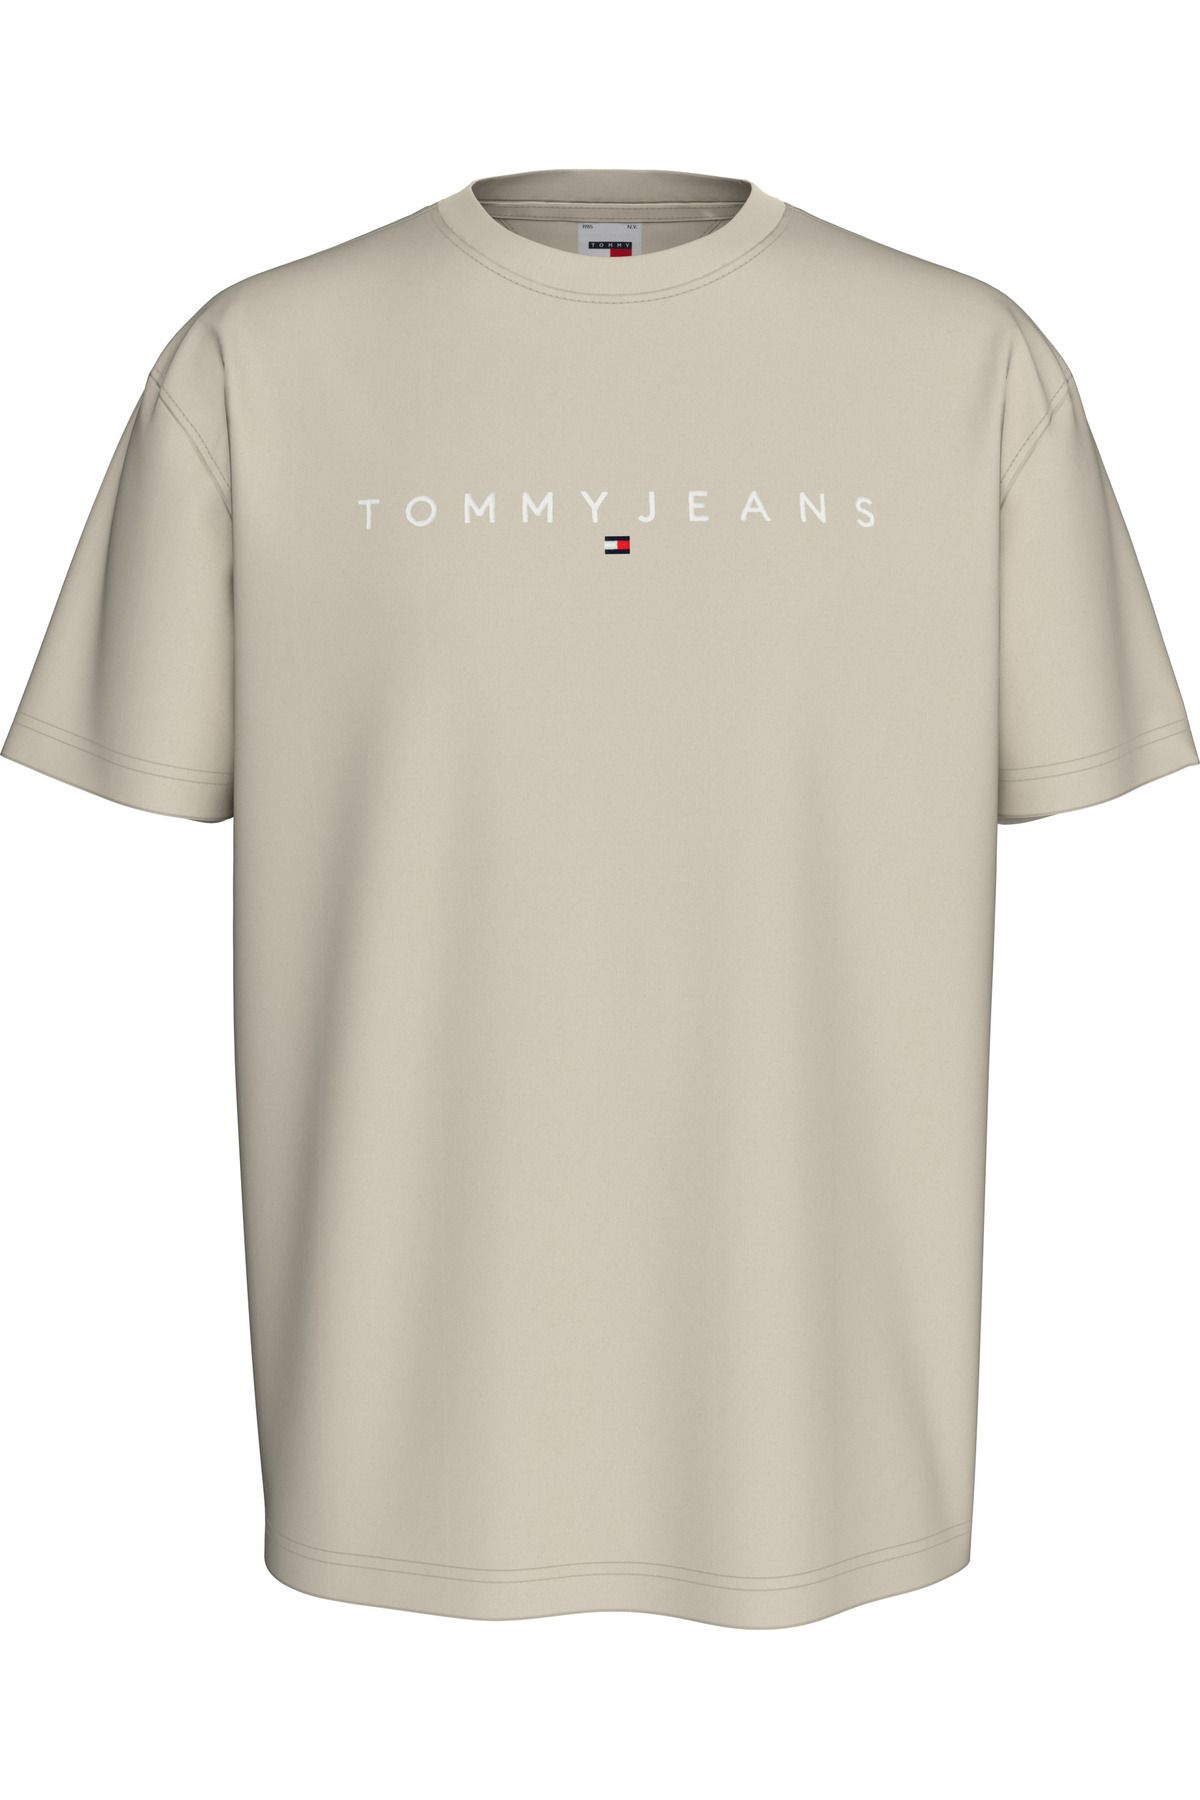 Tommy Hilfiger Erkek Marka Logolu Günlük Kullanıma Uygun Ekru T-Shirt DM0DM17993-ACG